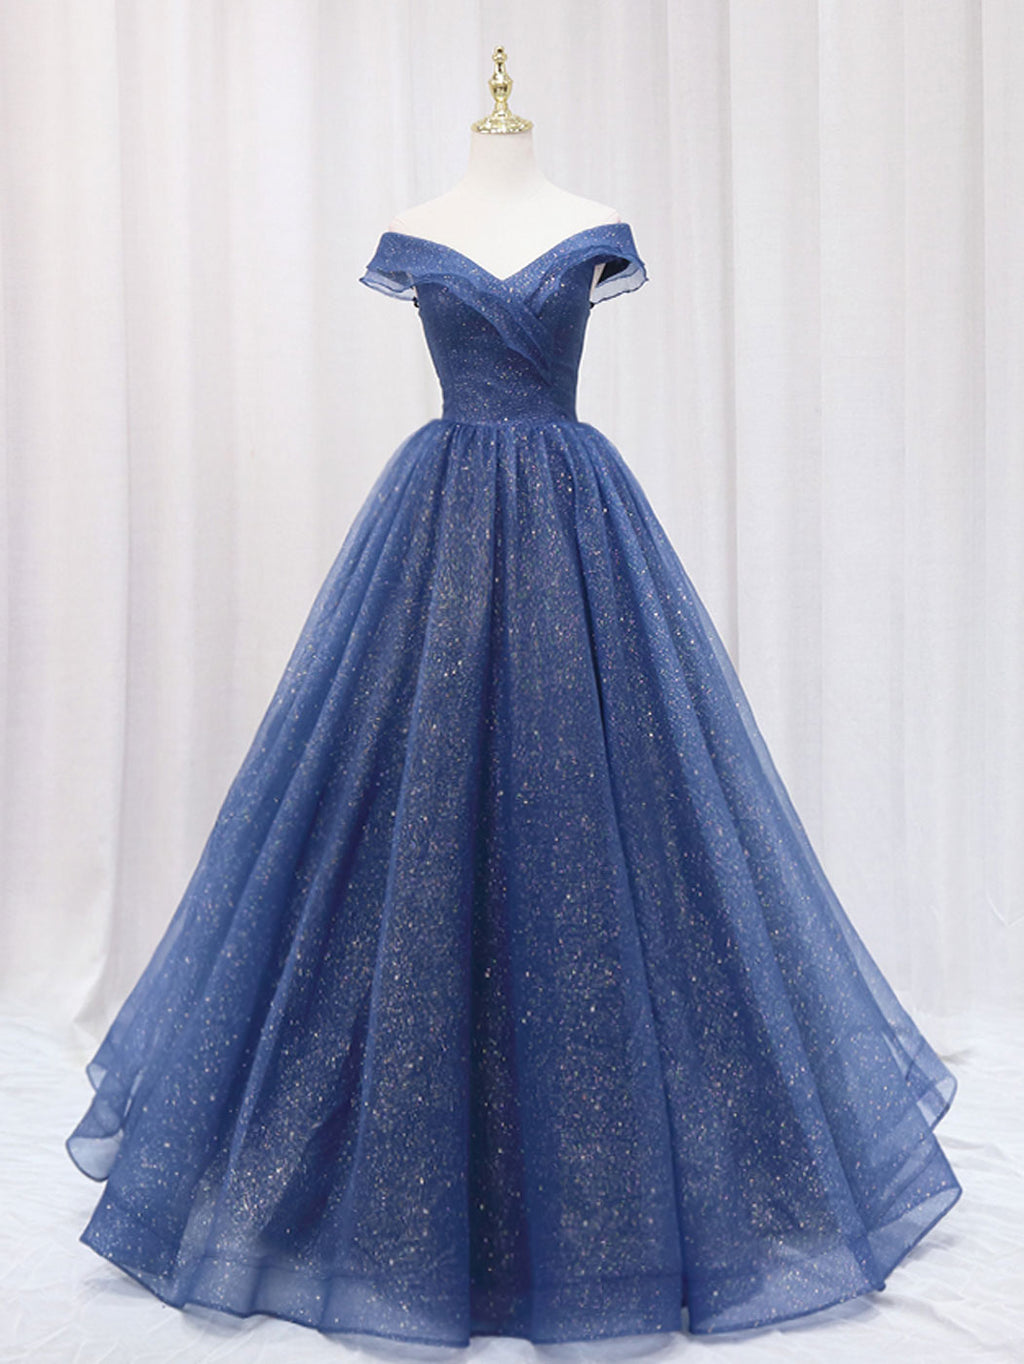 Dark Blue Tulle Long Prom Dress, A-Line Tulle Off Shoulder Blue Weddin –  shopluu